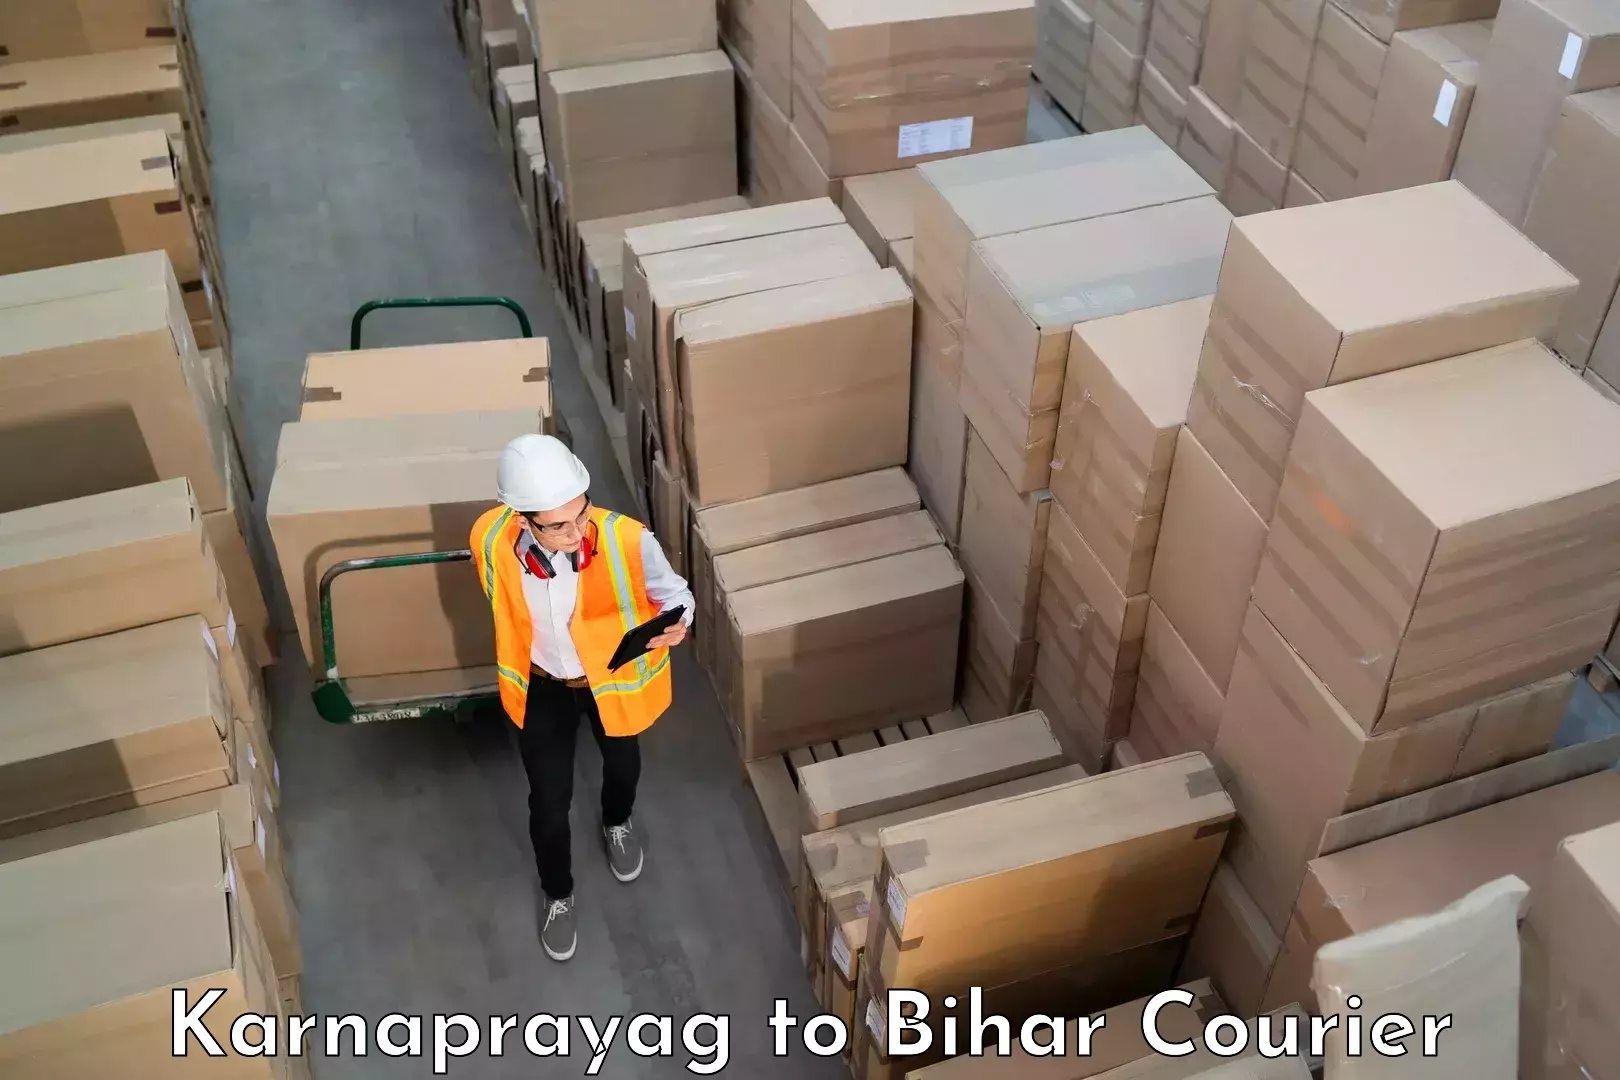 Baggage relocation service Karnaprayag to Aurangabad Bihar